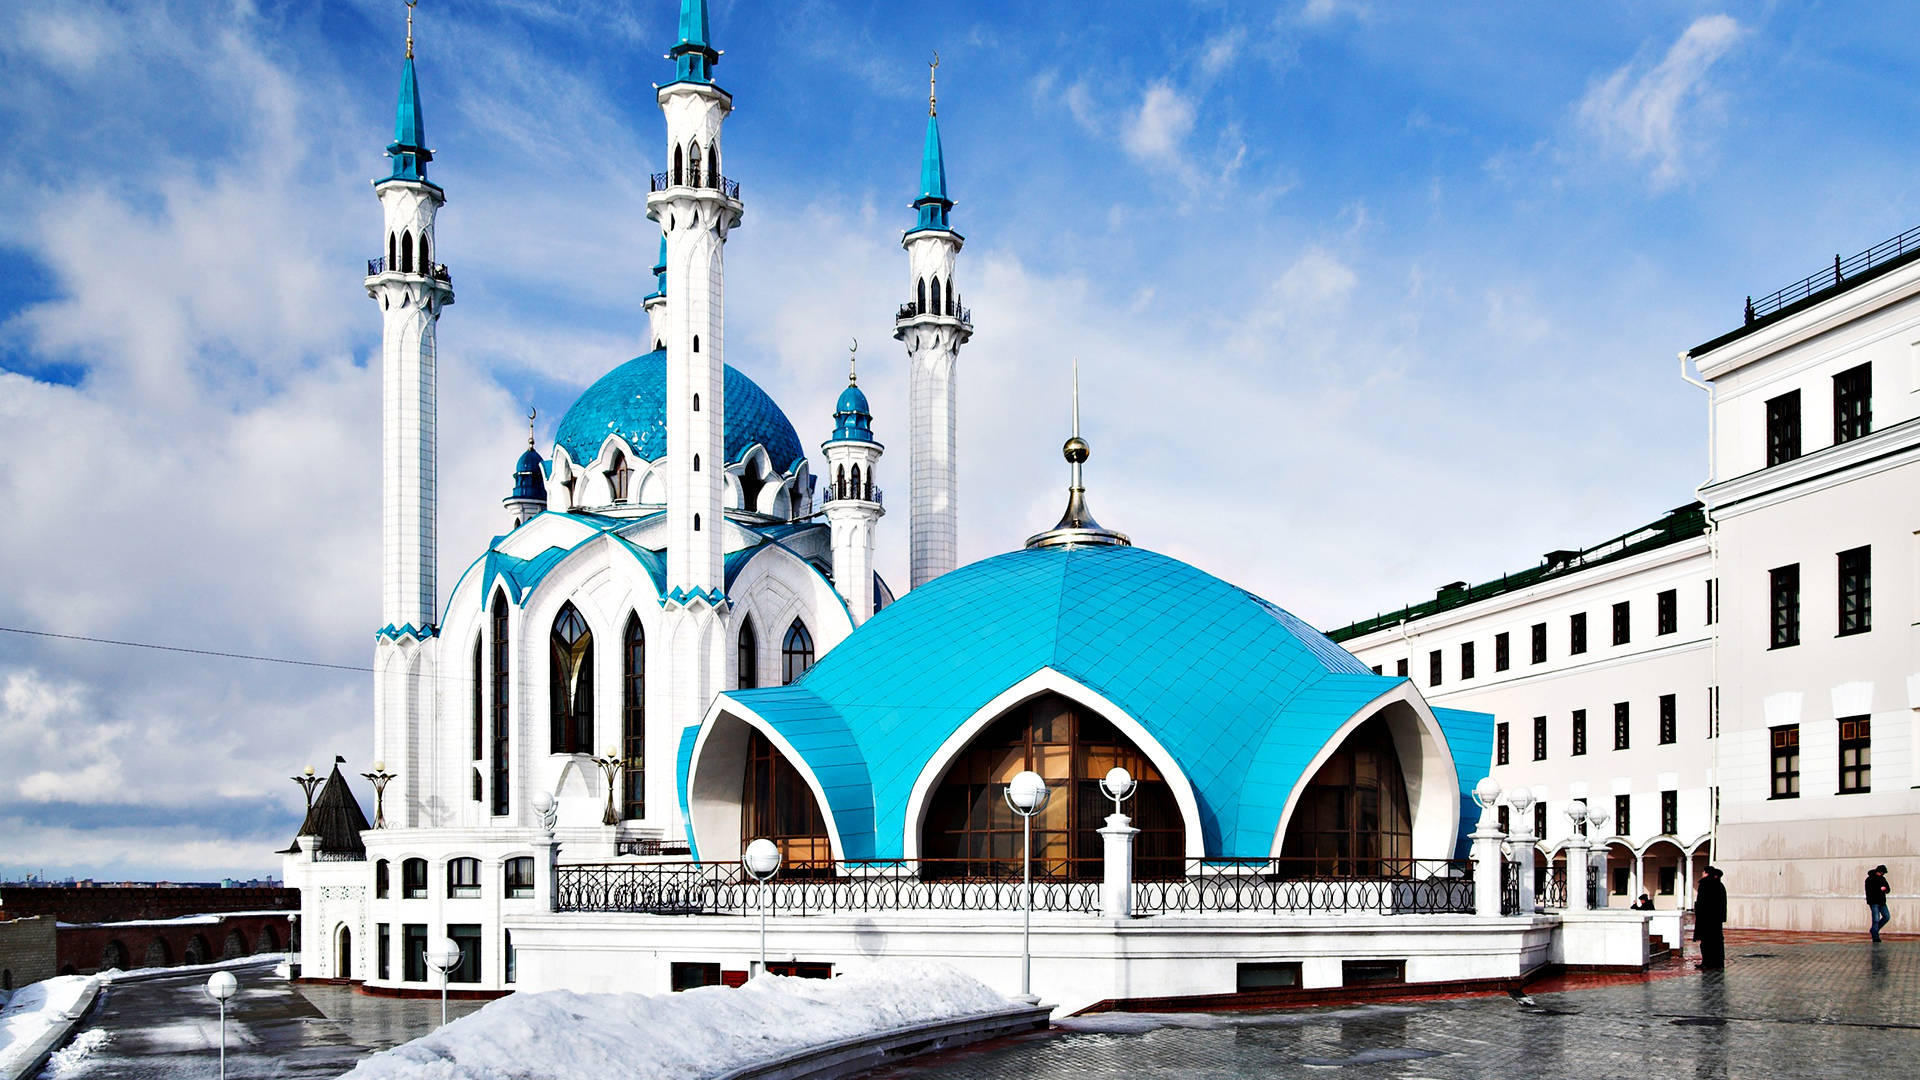 Caption: Majestic View Of Kul Sharif Mosque In Kazan Background